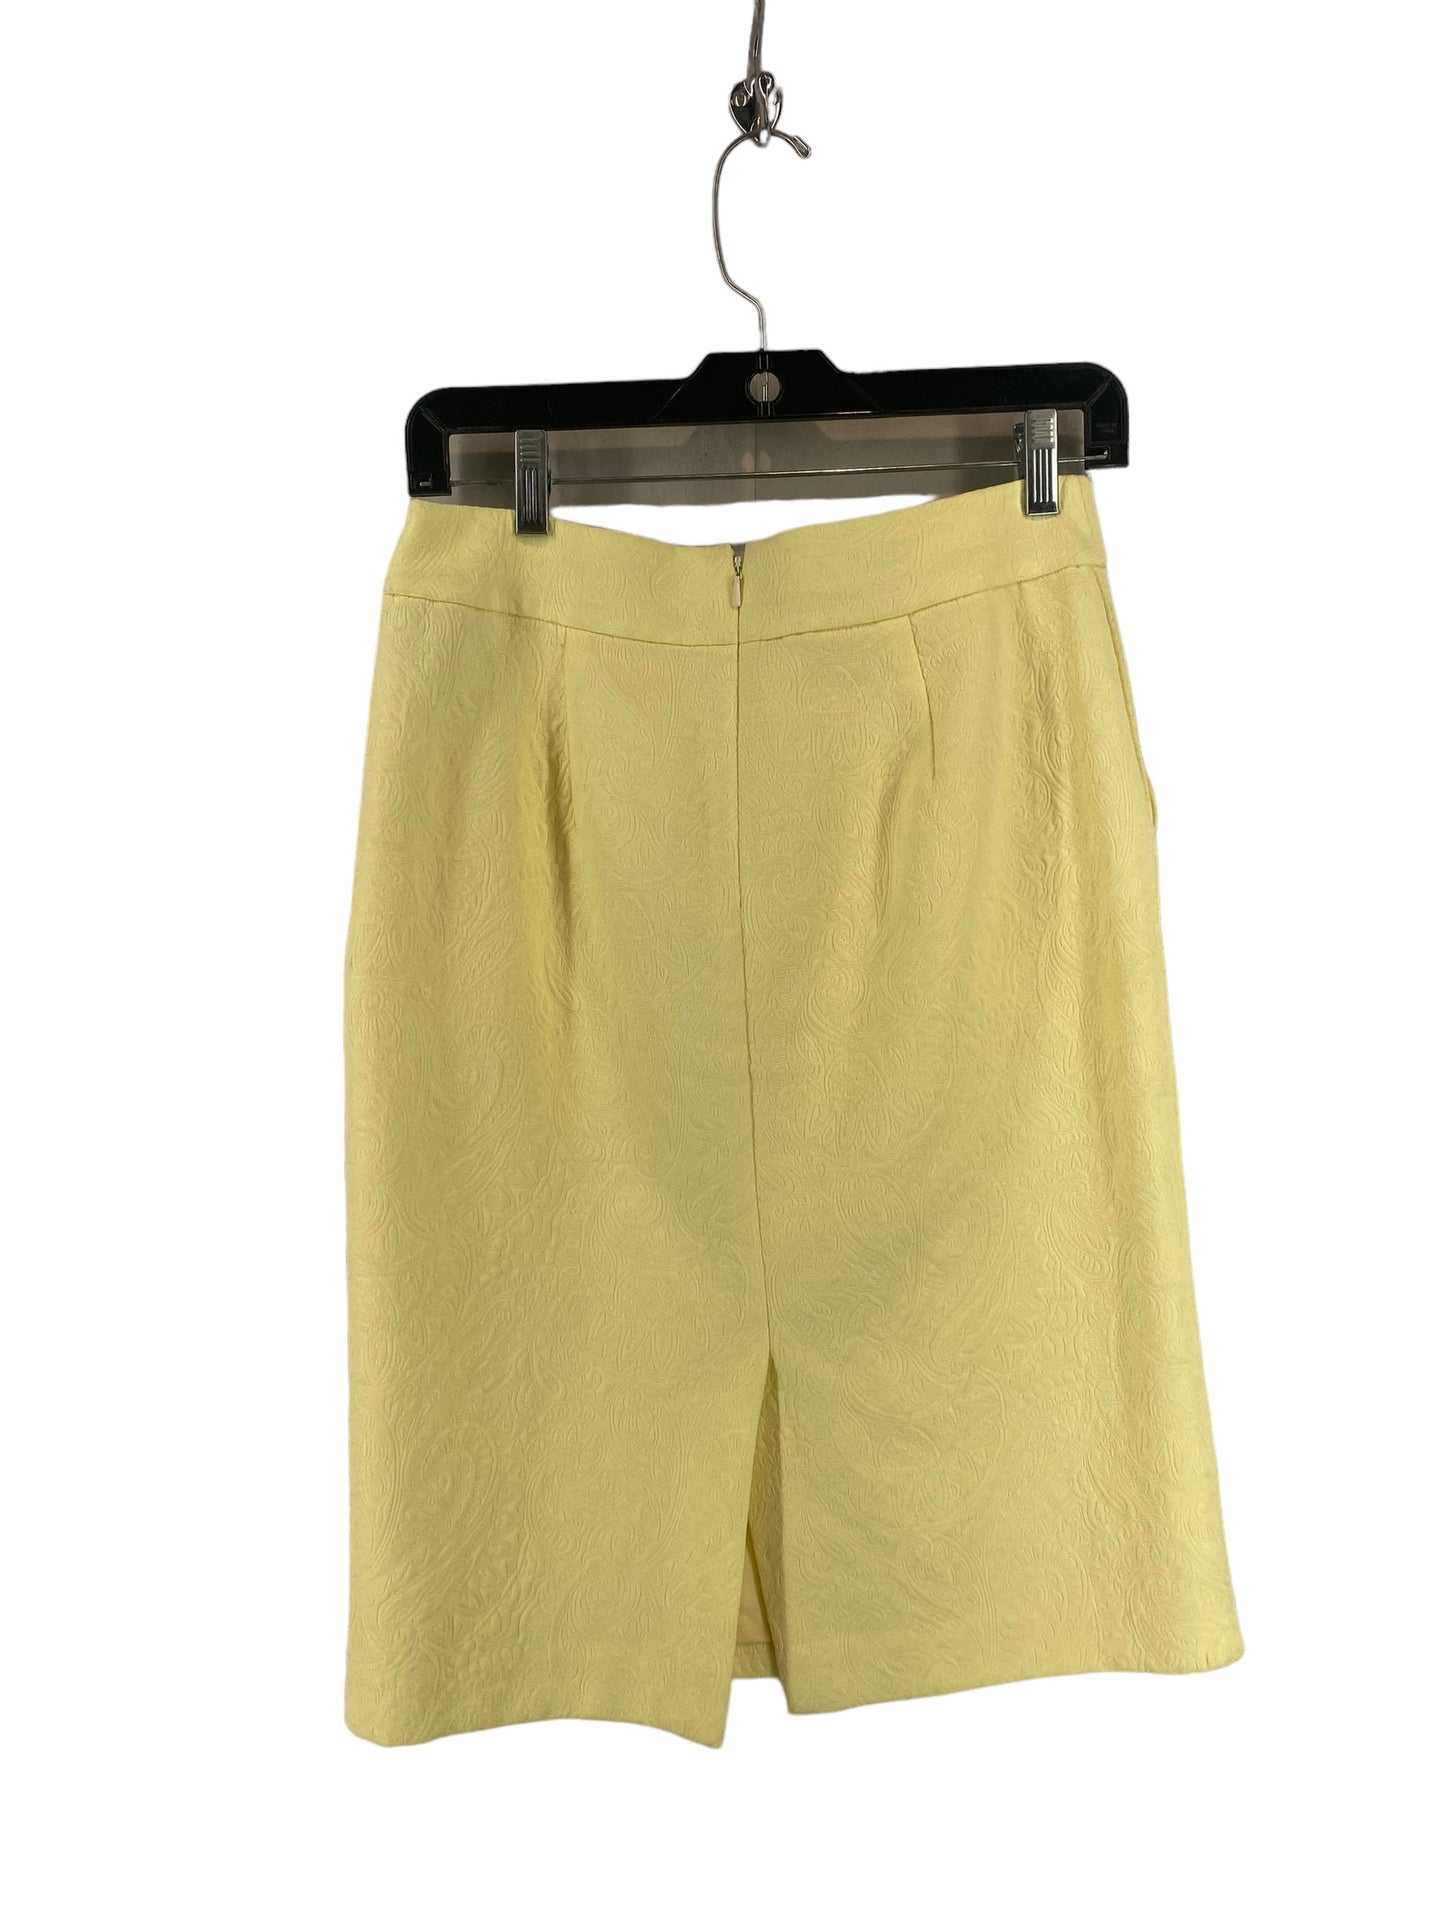 Skirt Midi By Banana Republic  Size: 2